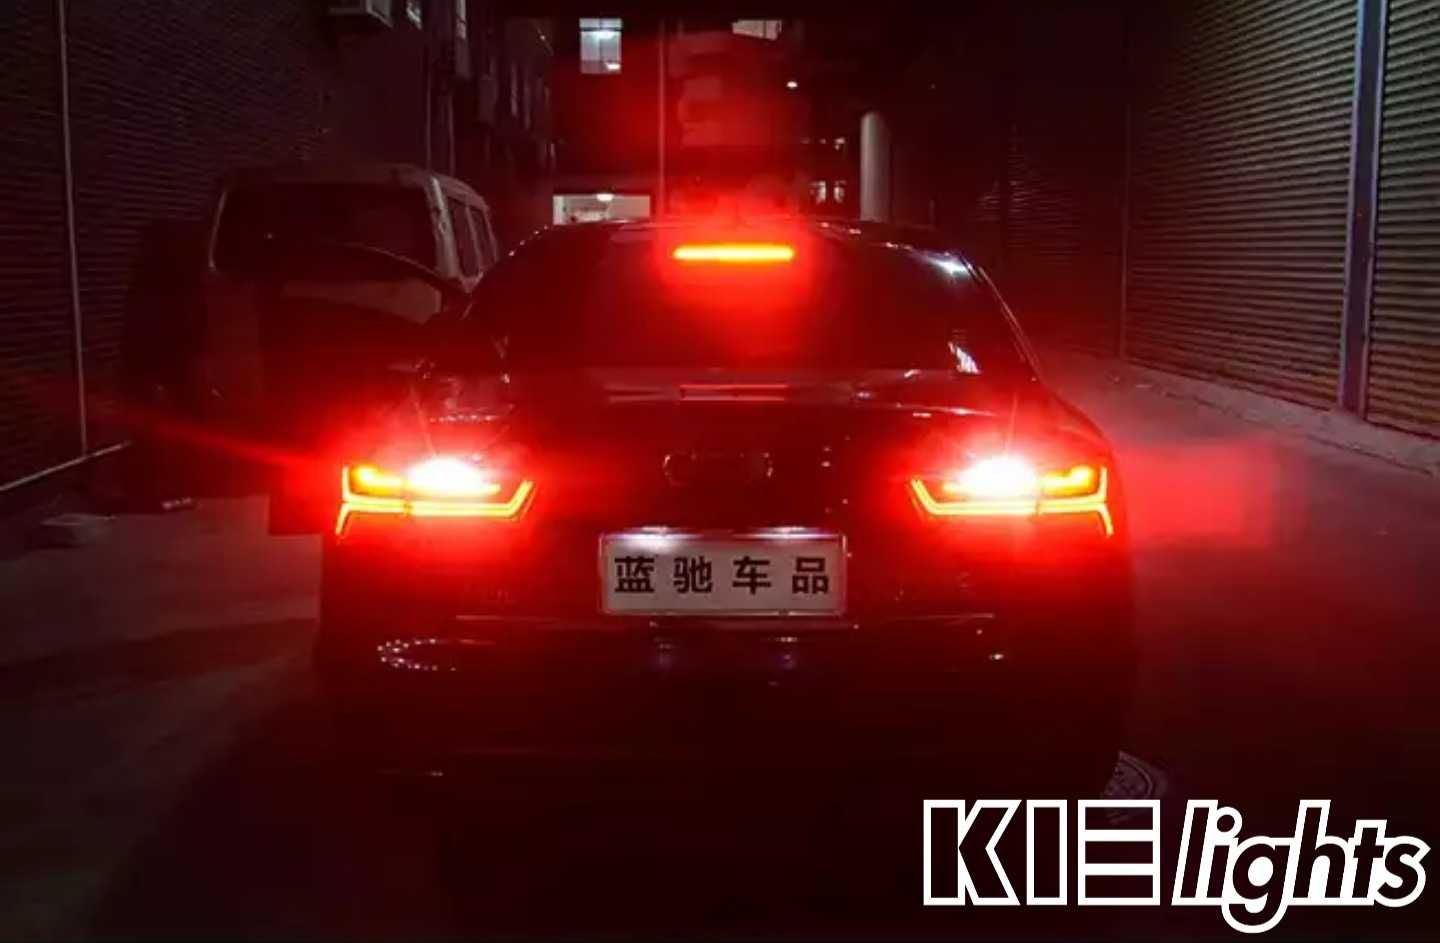 lampy tylne lampa tył Audi A6 S6 RS6 C7 2011 - 2018